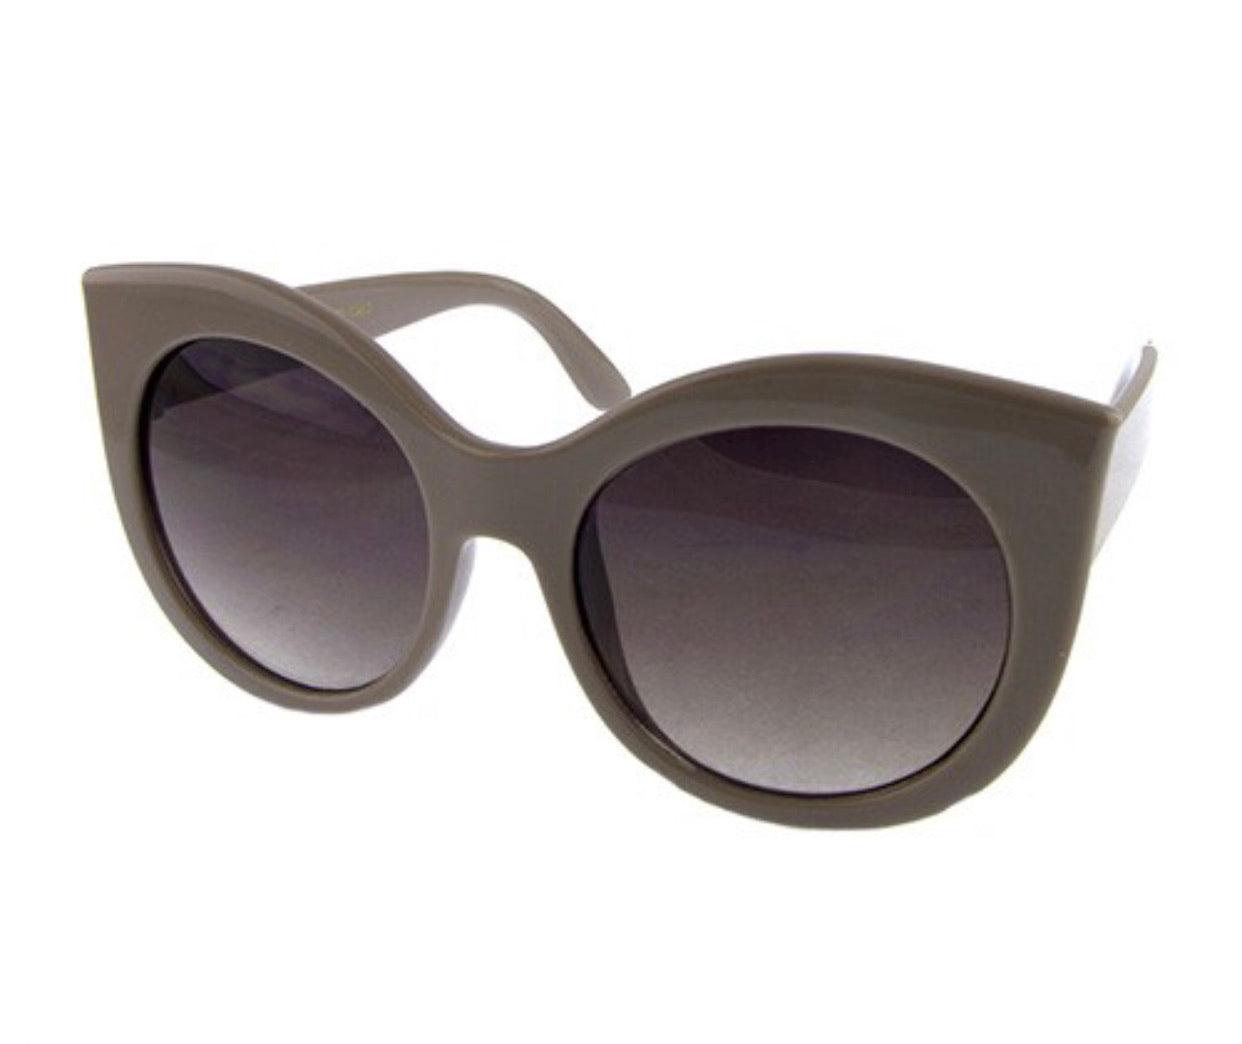 Kids Cat Eye Sunglasses - Weekend Shade Sunglasses